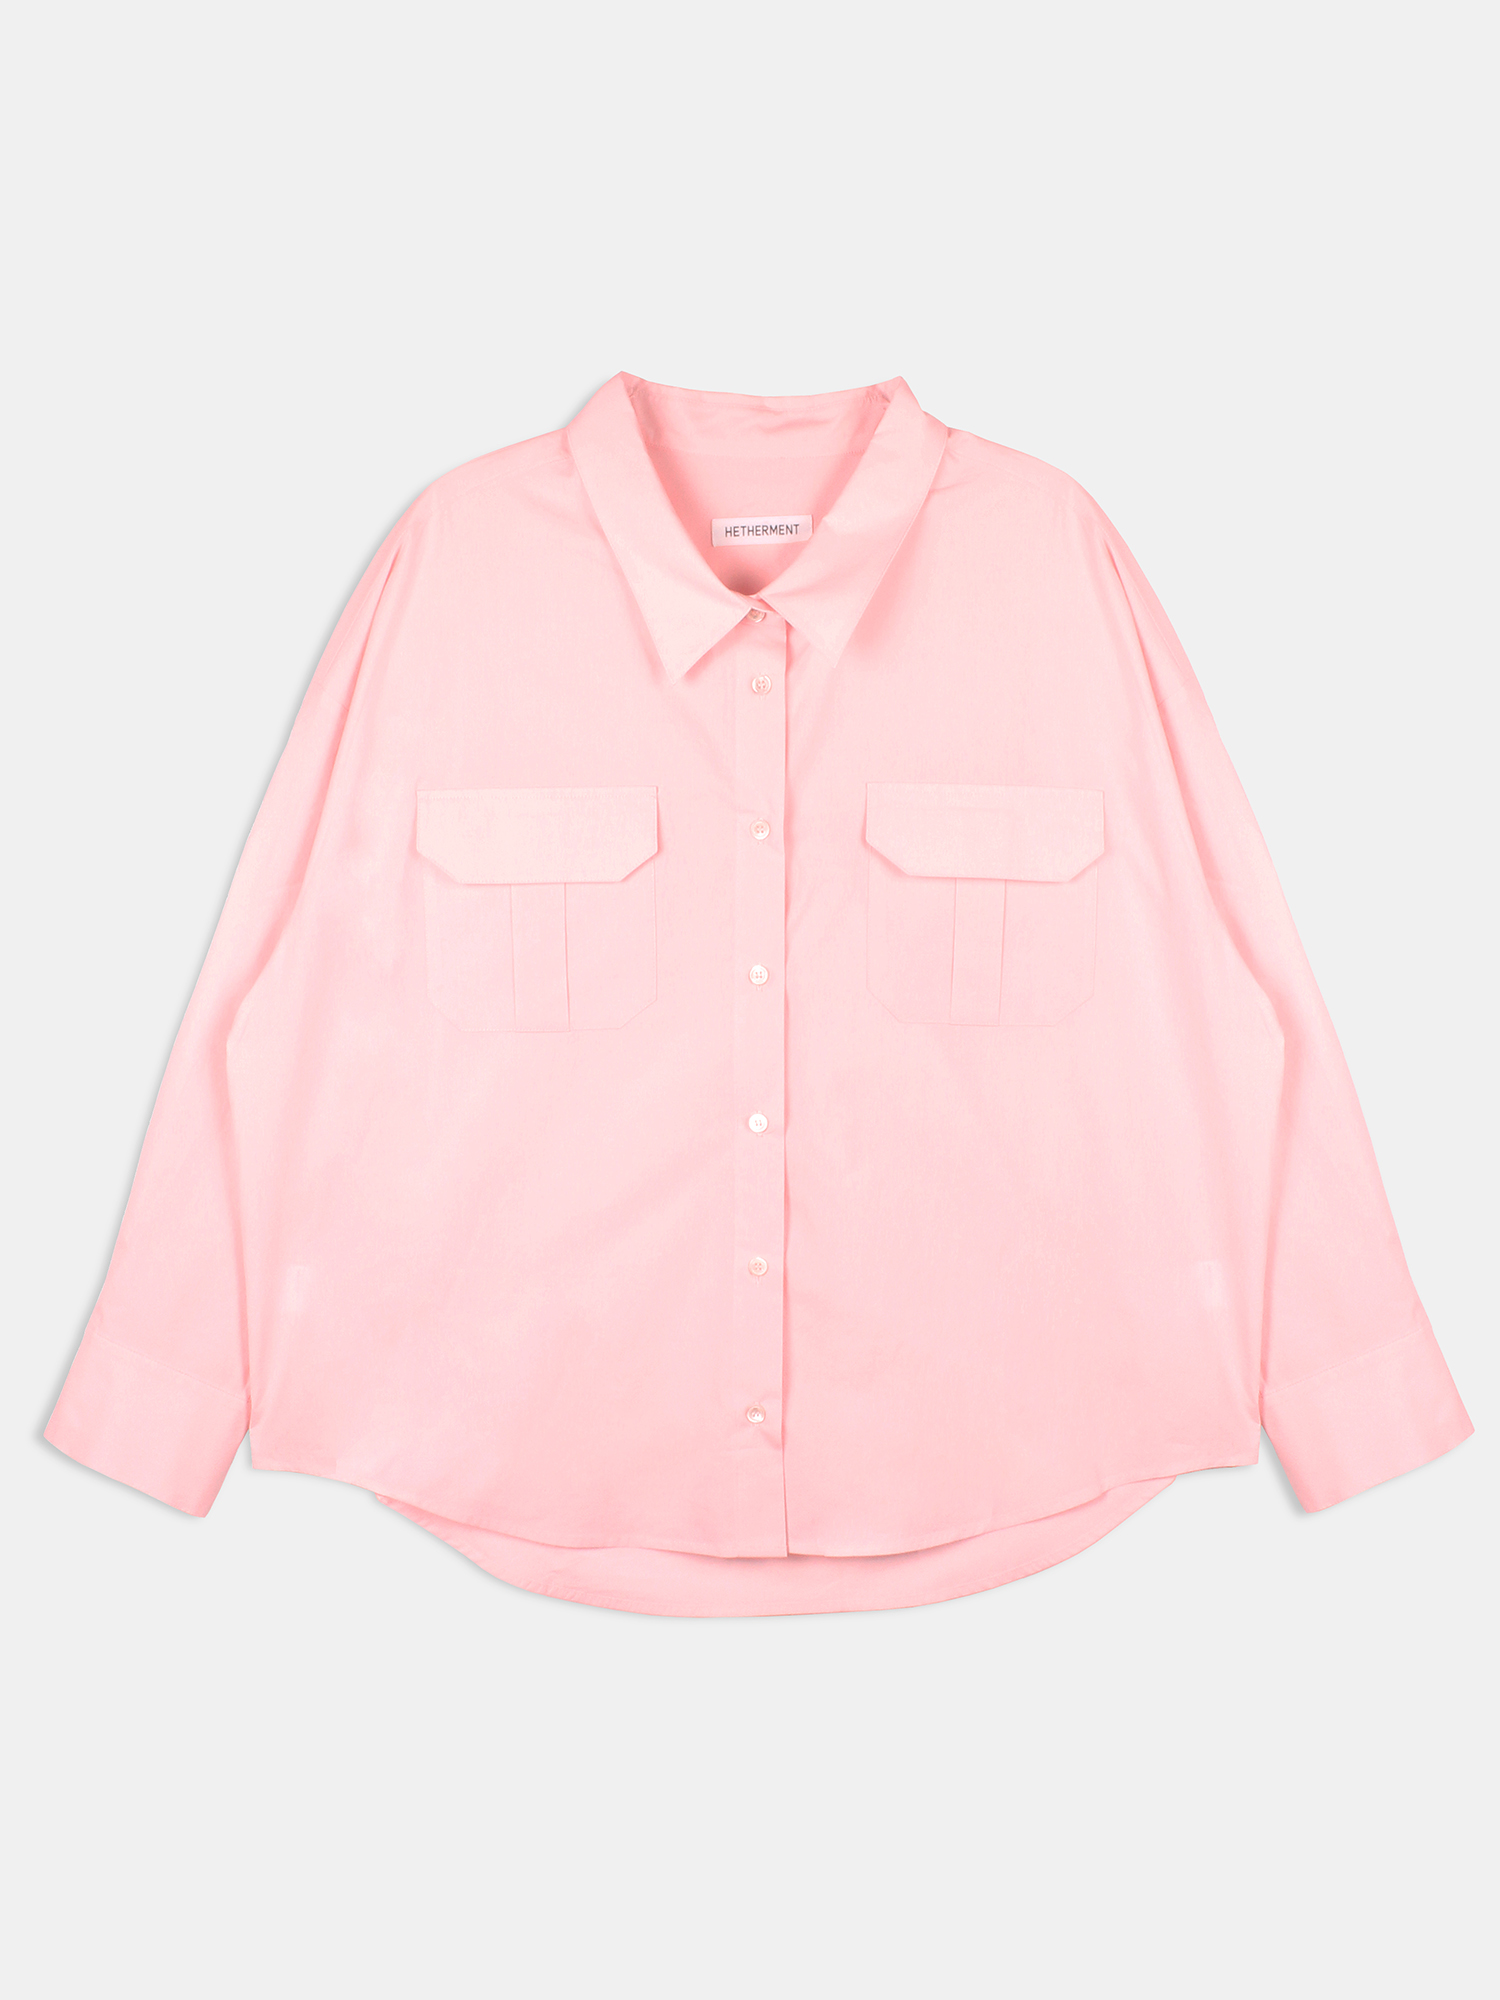 two pocket painter shirts (sunset pink)